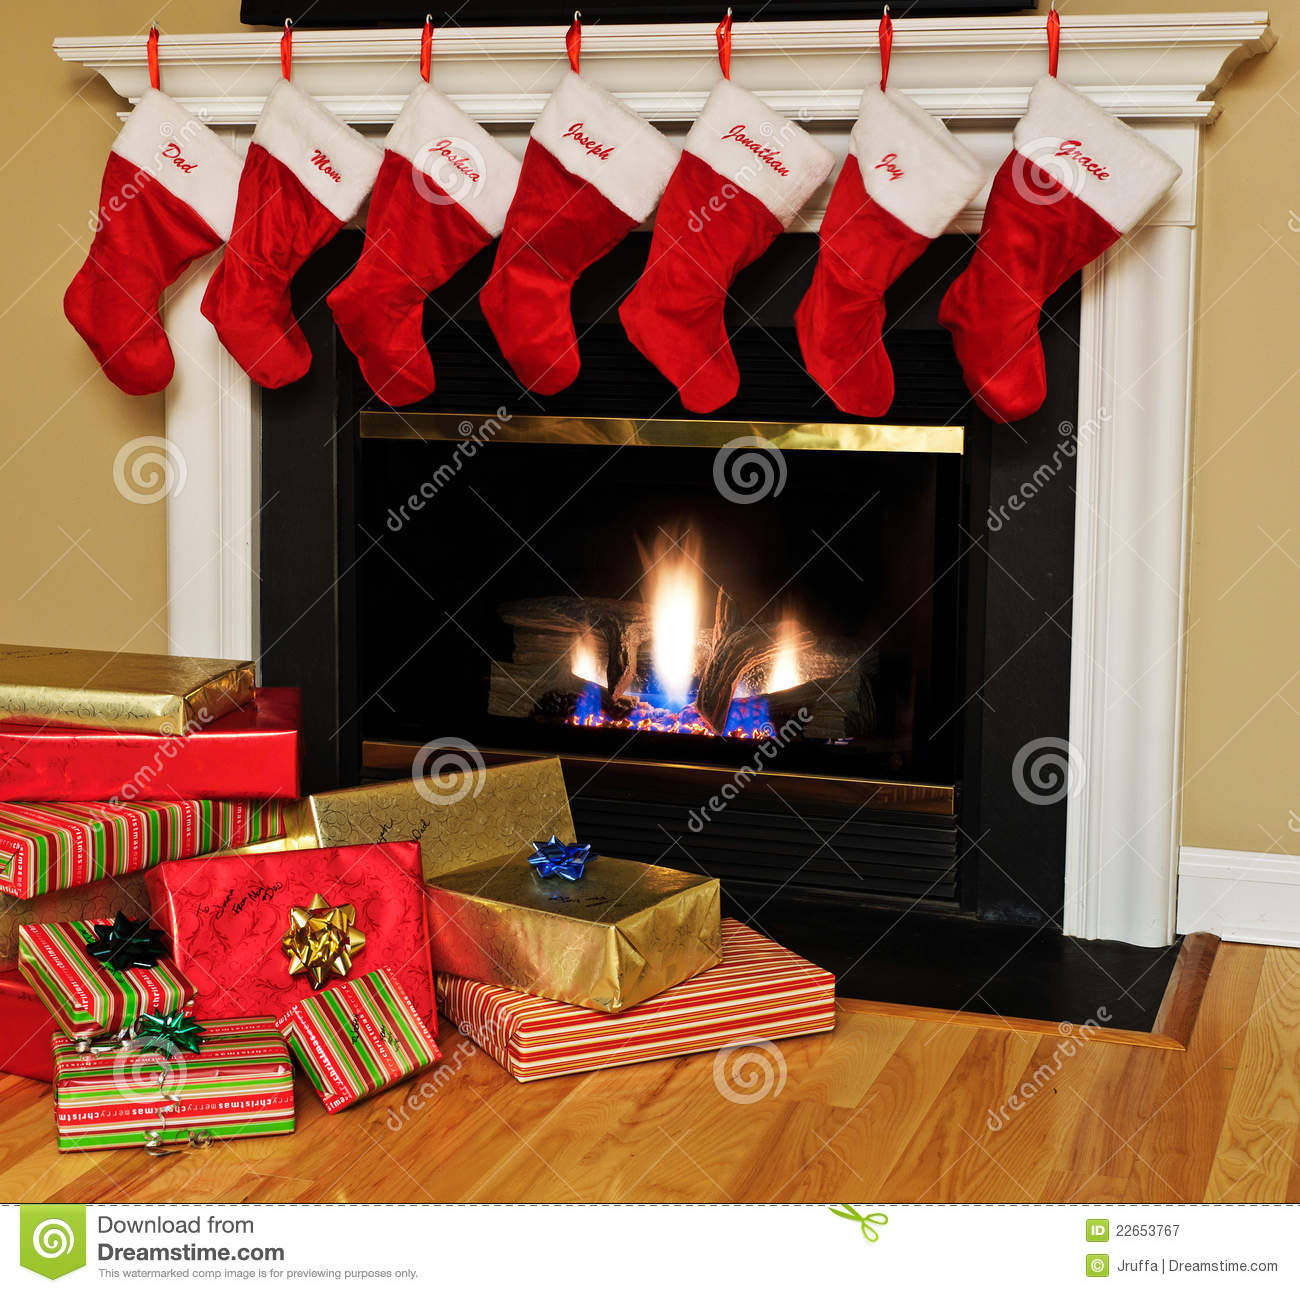 Christmas Stockings Hanging Over Fireplace
 Christmas Stockings By The Fireplace Stock Image Image